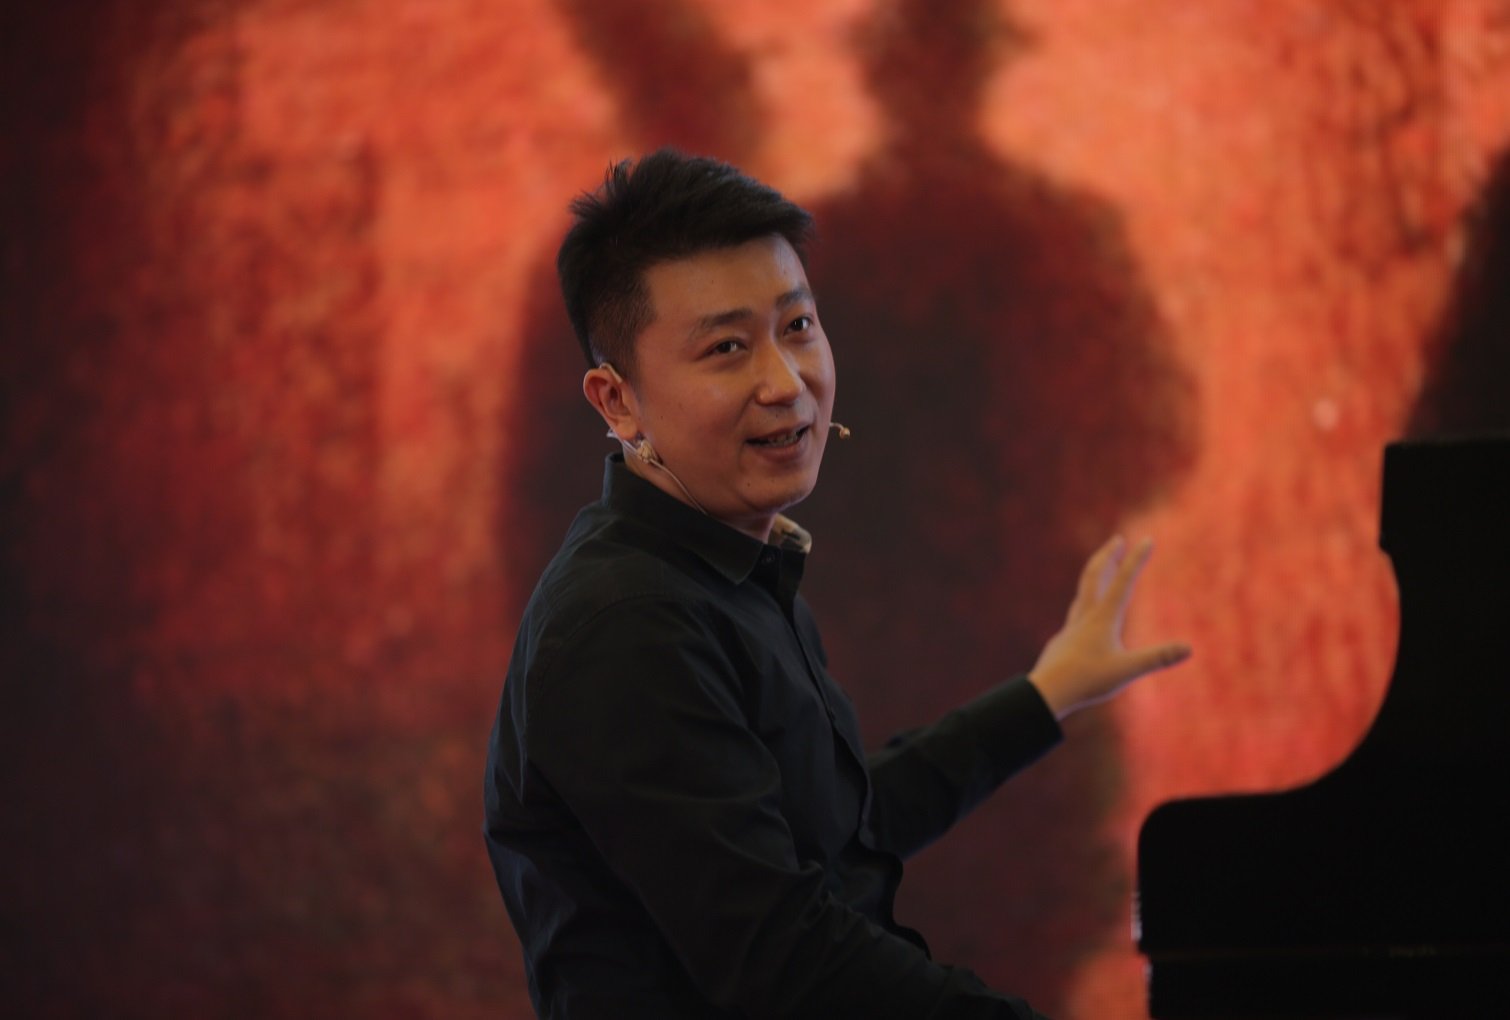 PETROF Art Family welcomed pianist Bai Jingzhi